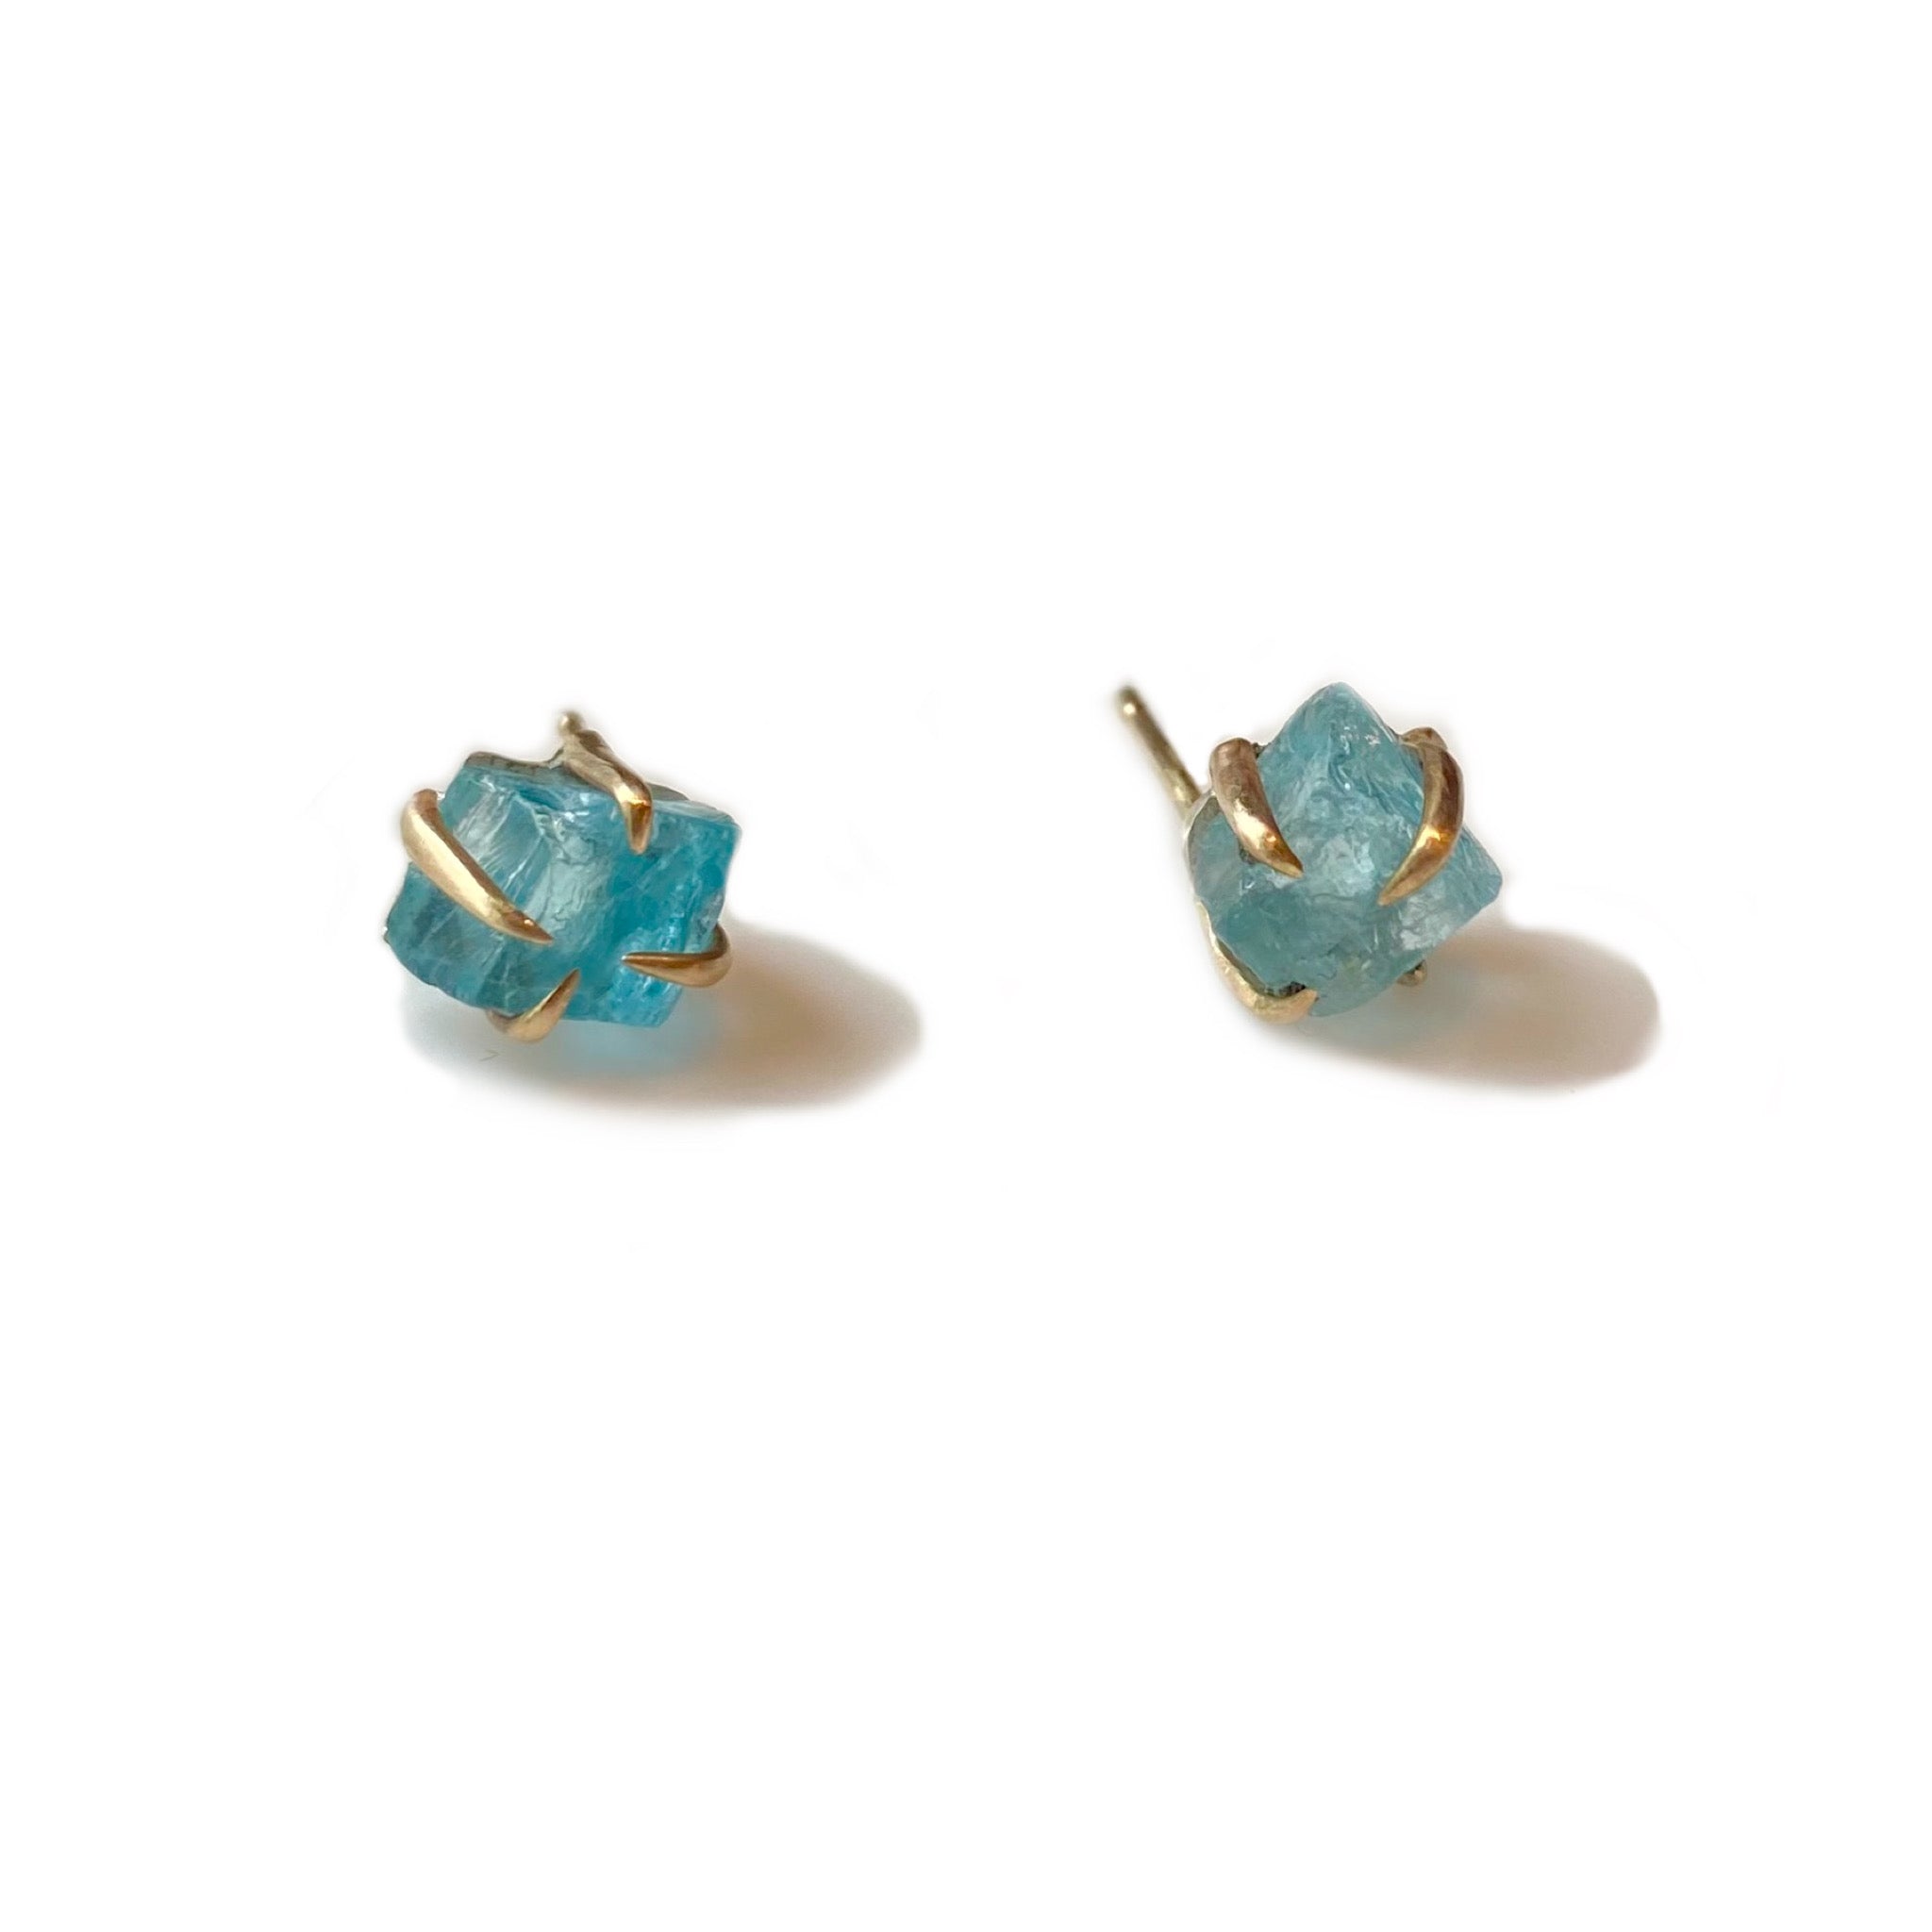 Blue Apatite Stud Earrings in gold